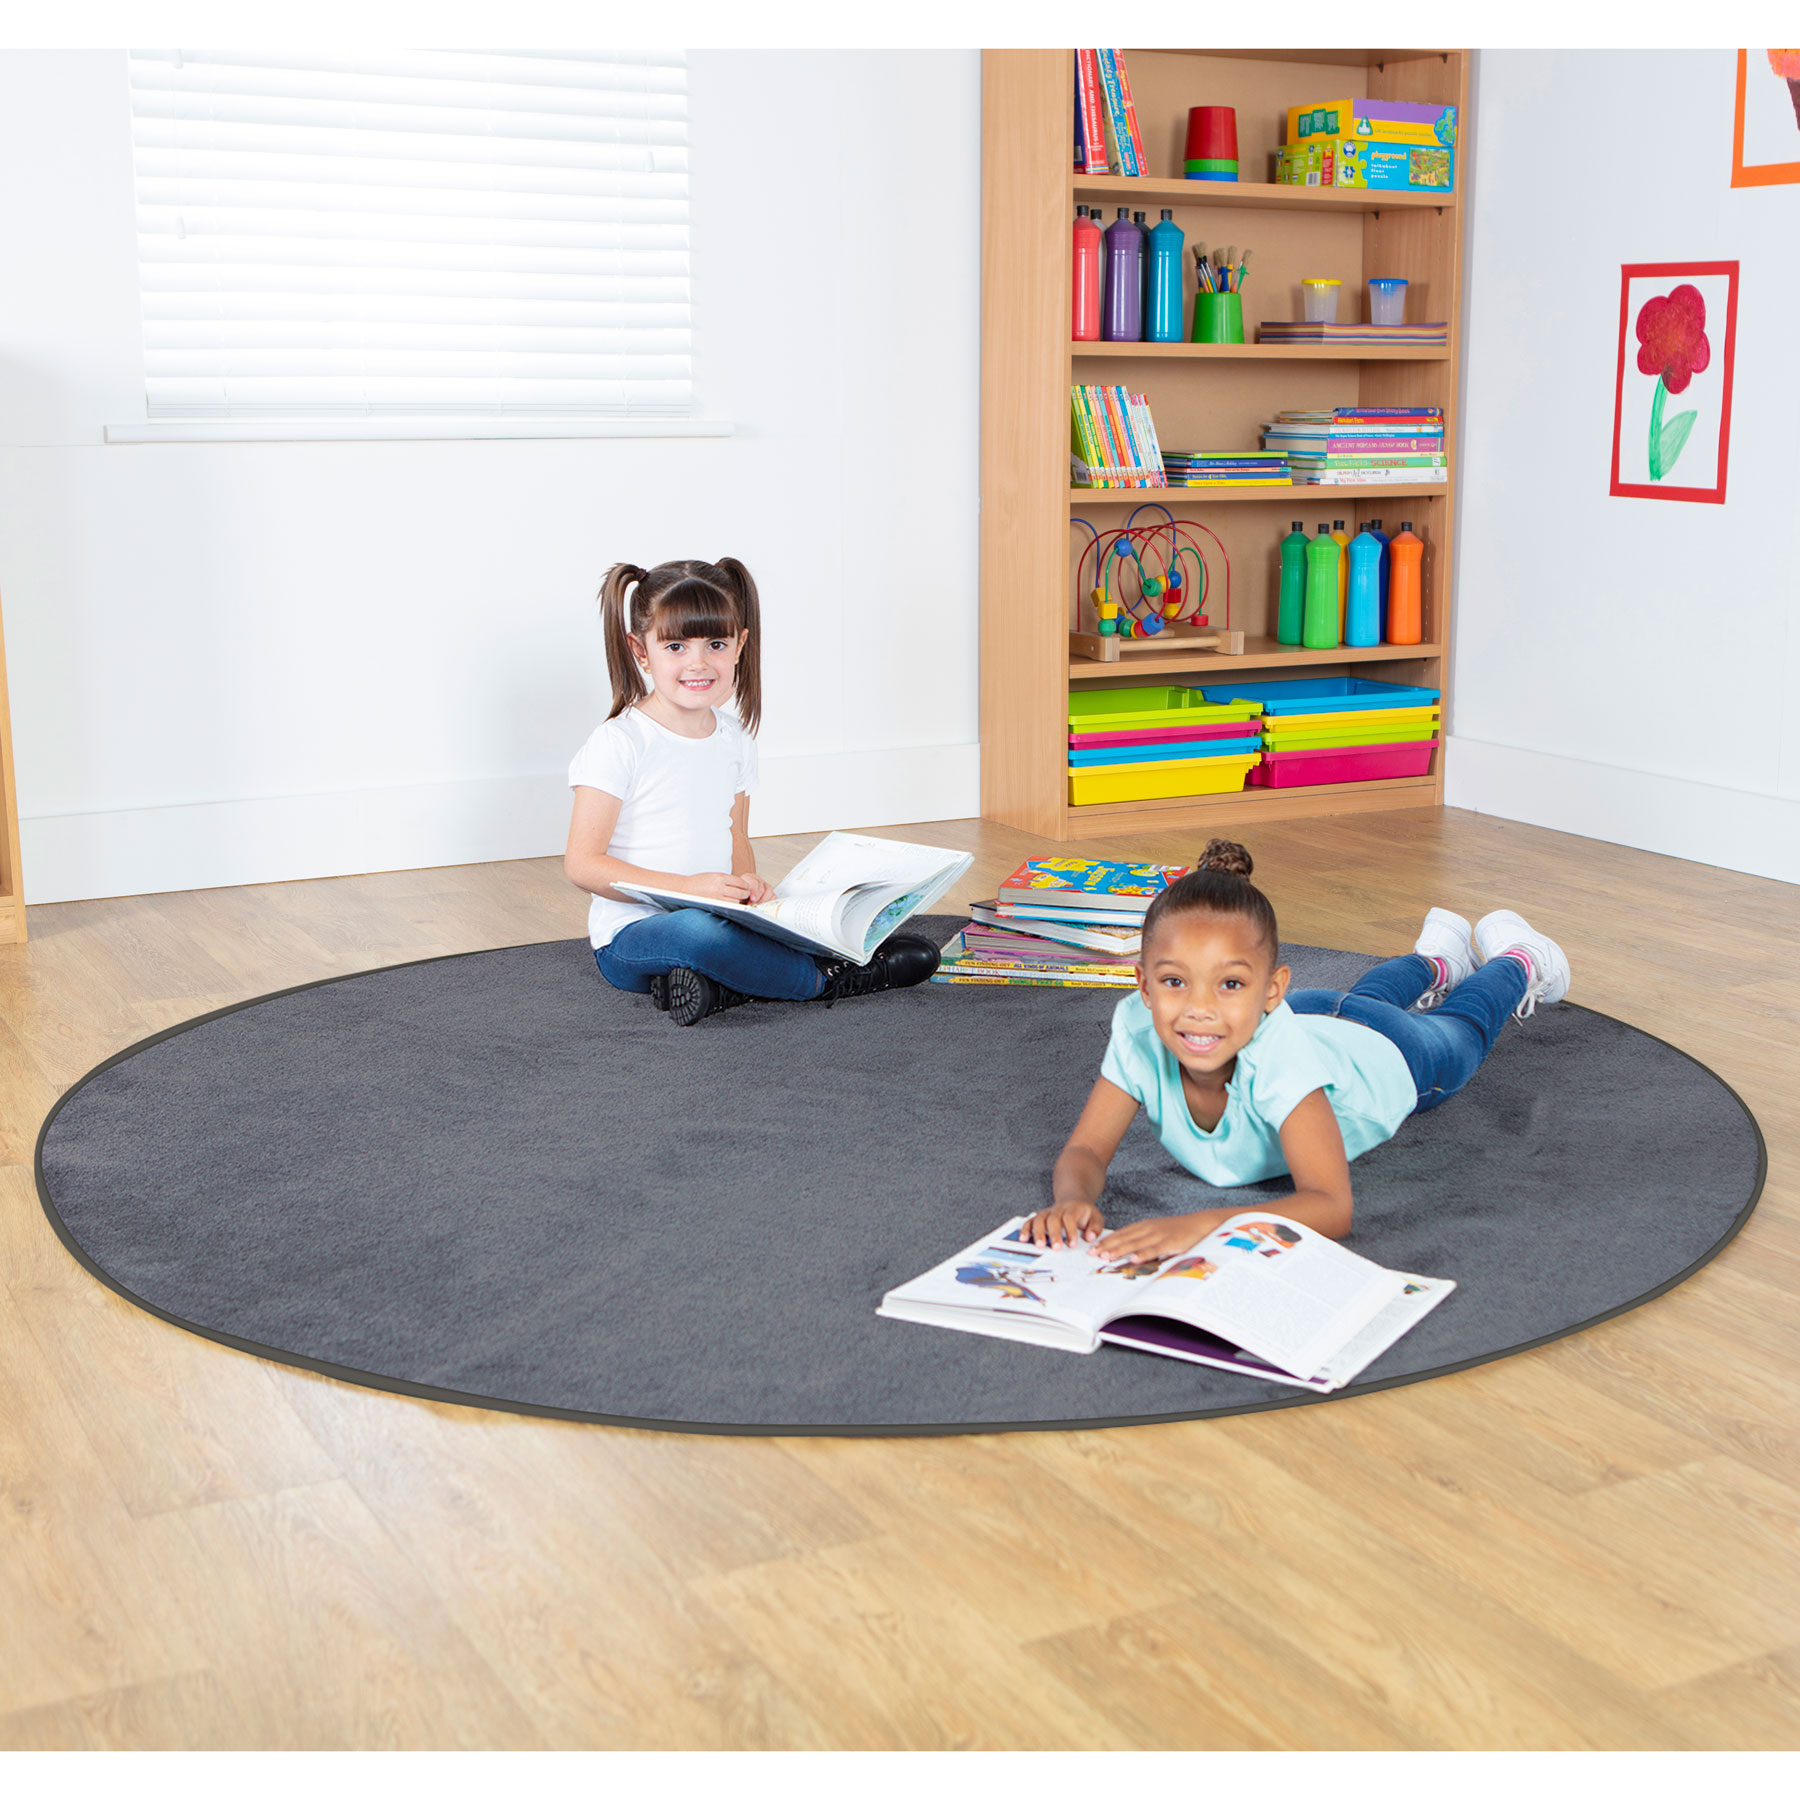 Plain Colour Round Classroom Carpet - Grey